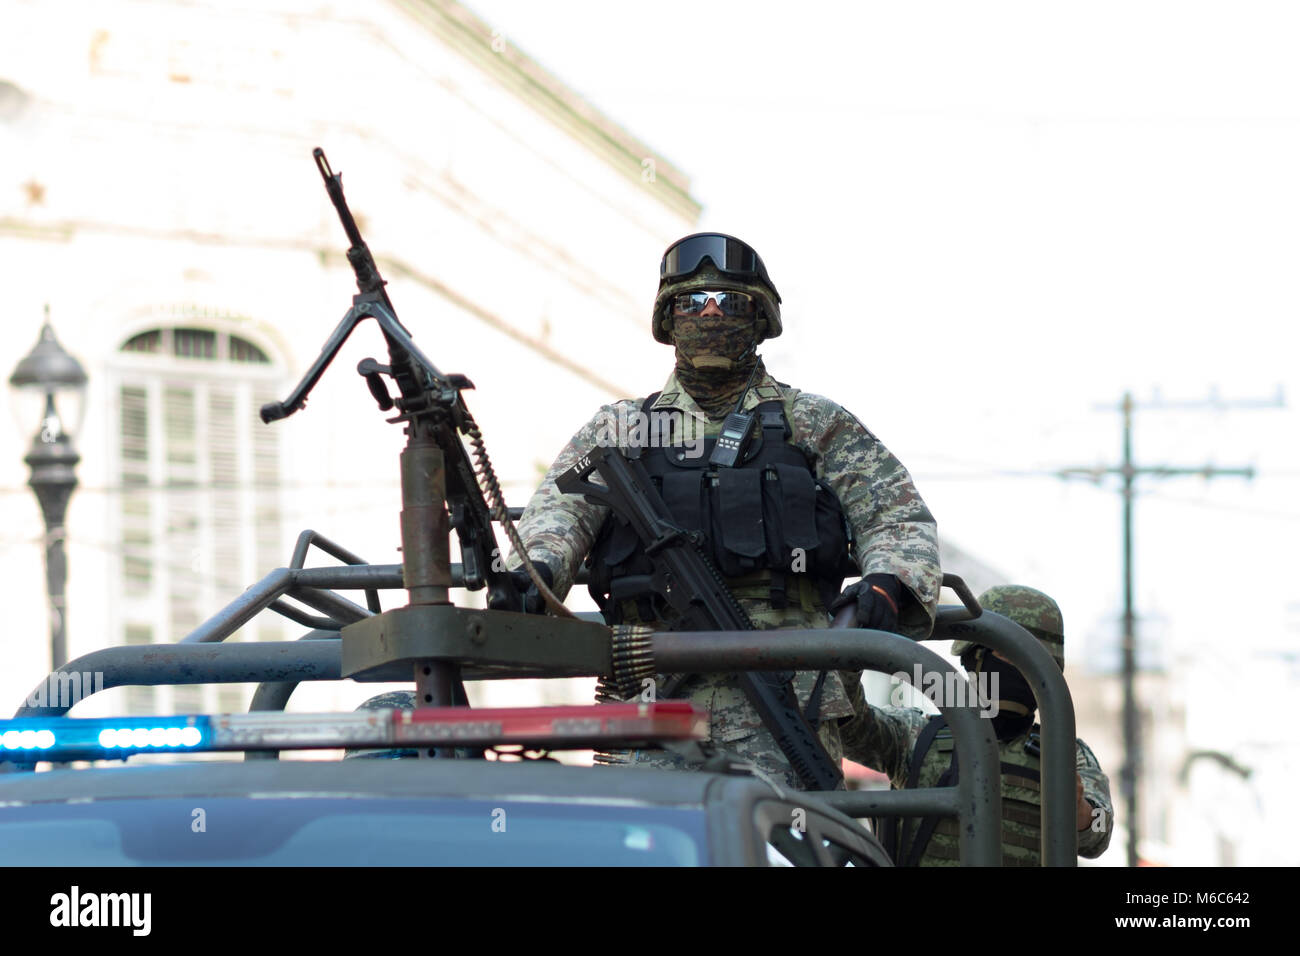 Matamoros, Tamaulipas, Mexiko - 24. Februar 2018: Die mexikanischen Streitkräfte während Operationen in Norden easthern Mexiko. Stockfoto